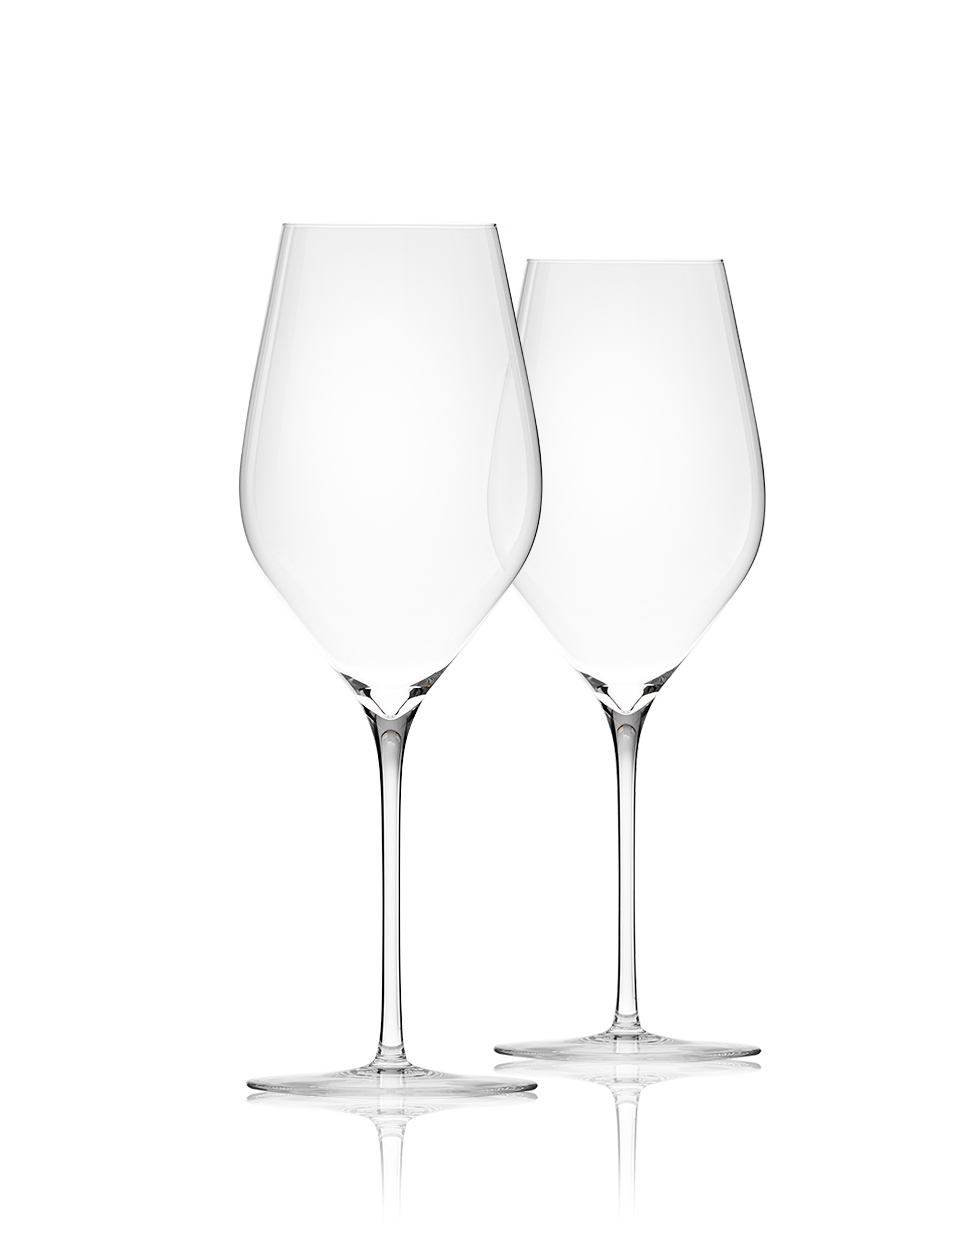 Oeno wine glass, 500 ml - gallery #3